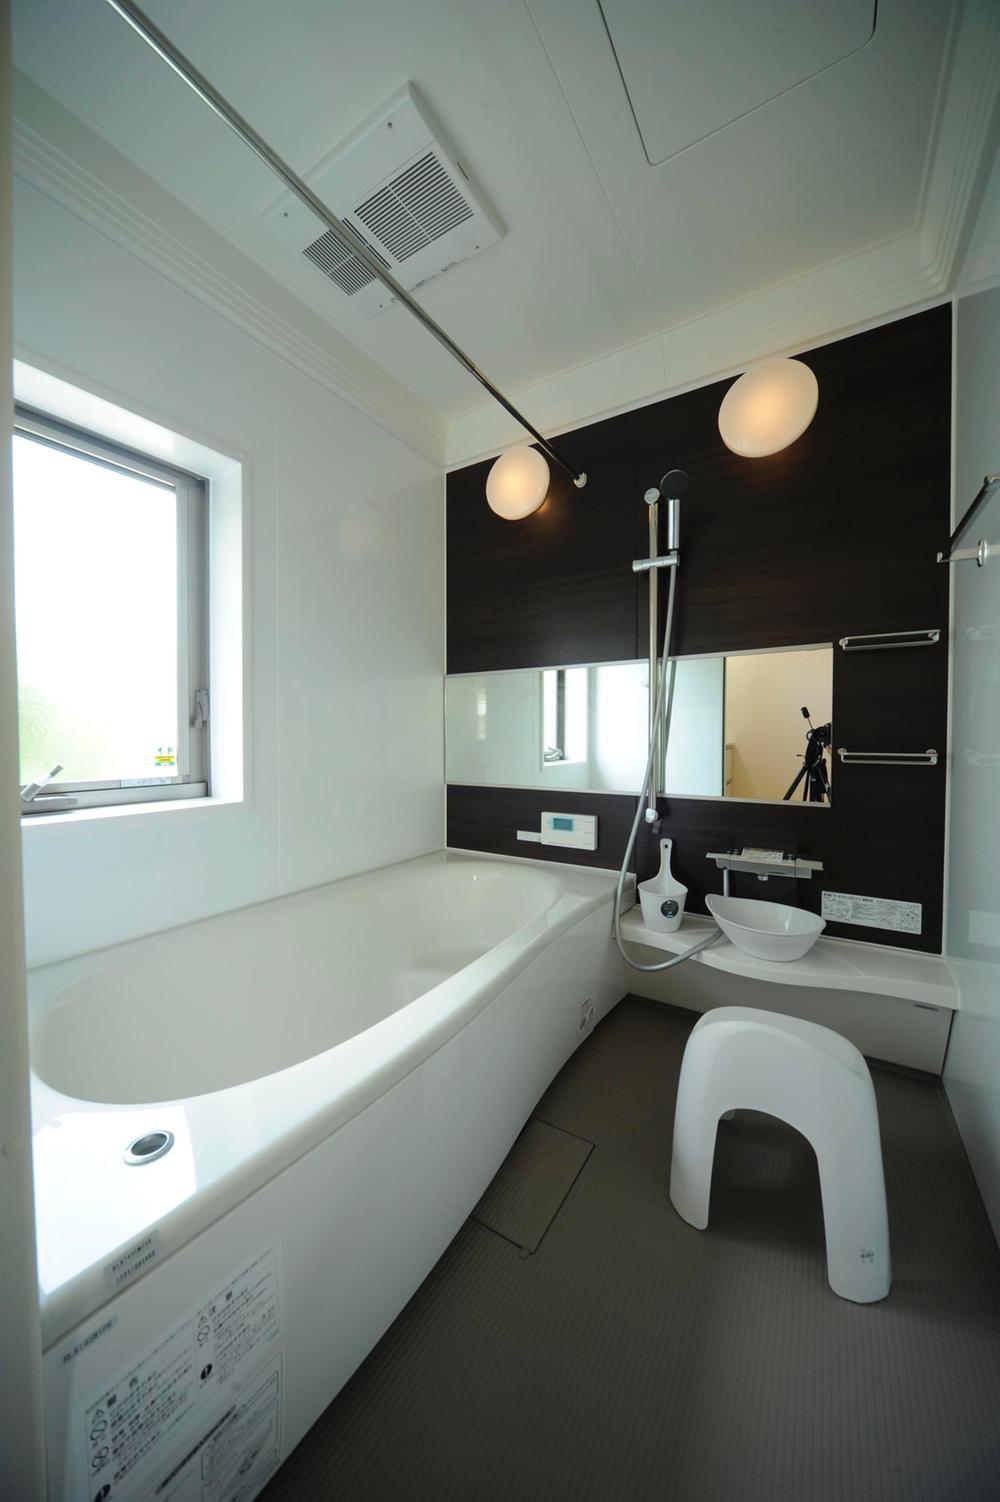 Bathroom. Ensure economic efficiency and comfort in a wide mirror and kept warm bath.